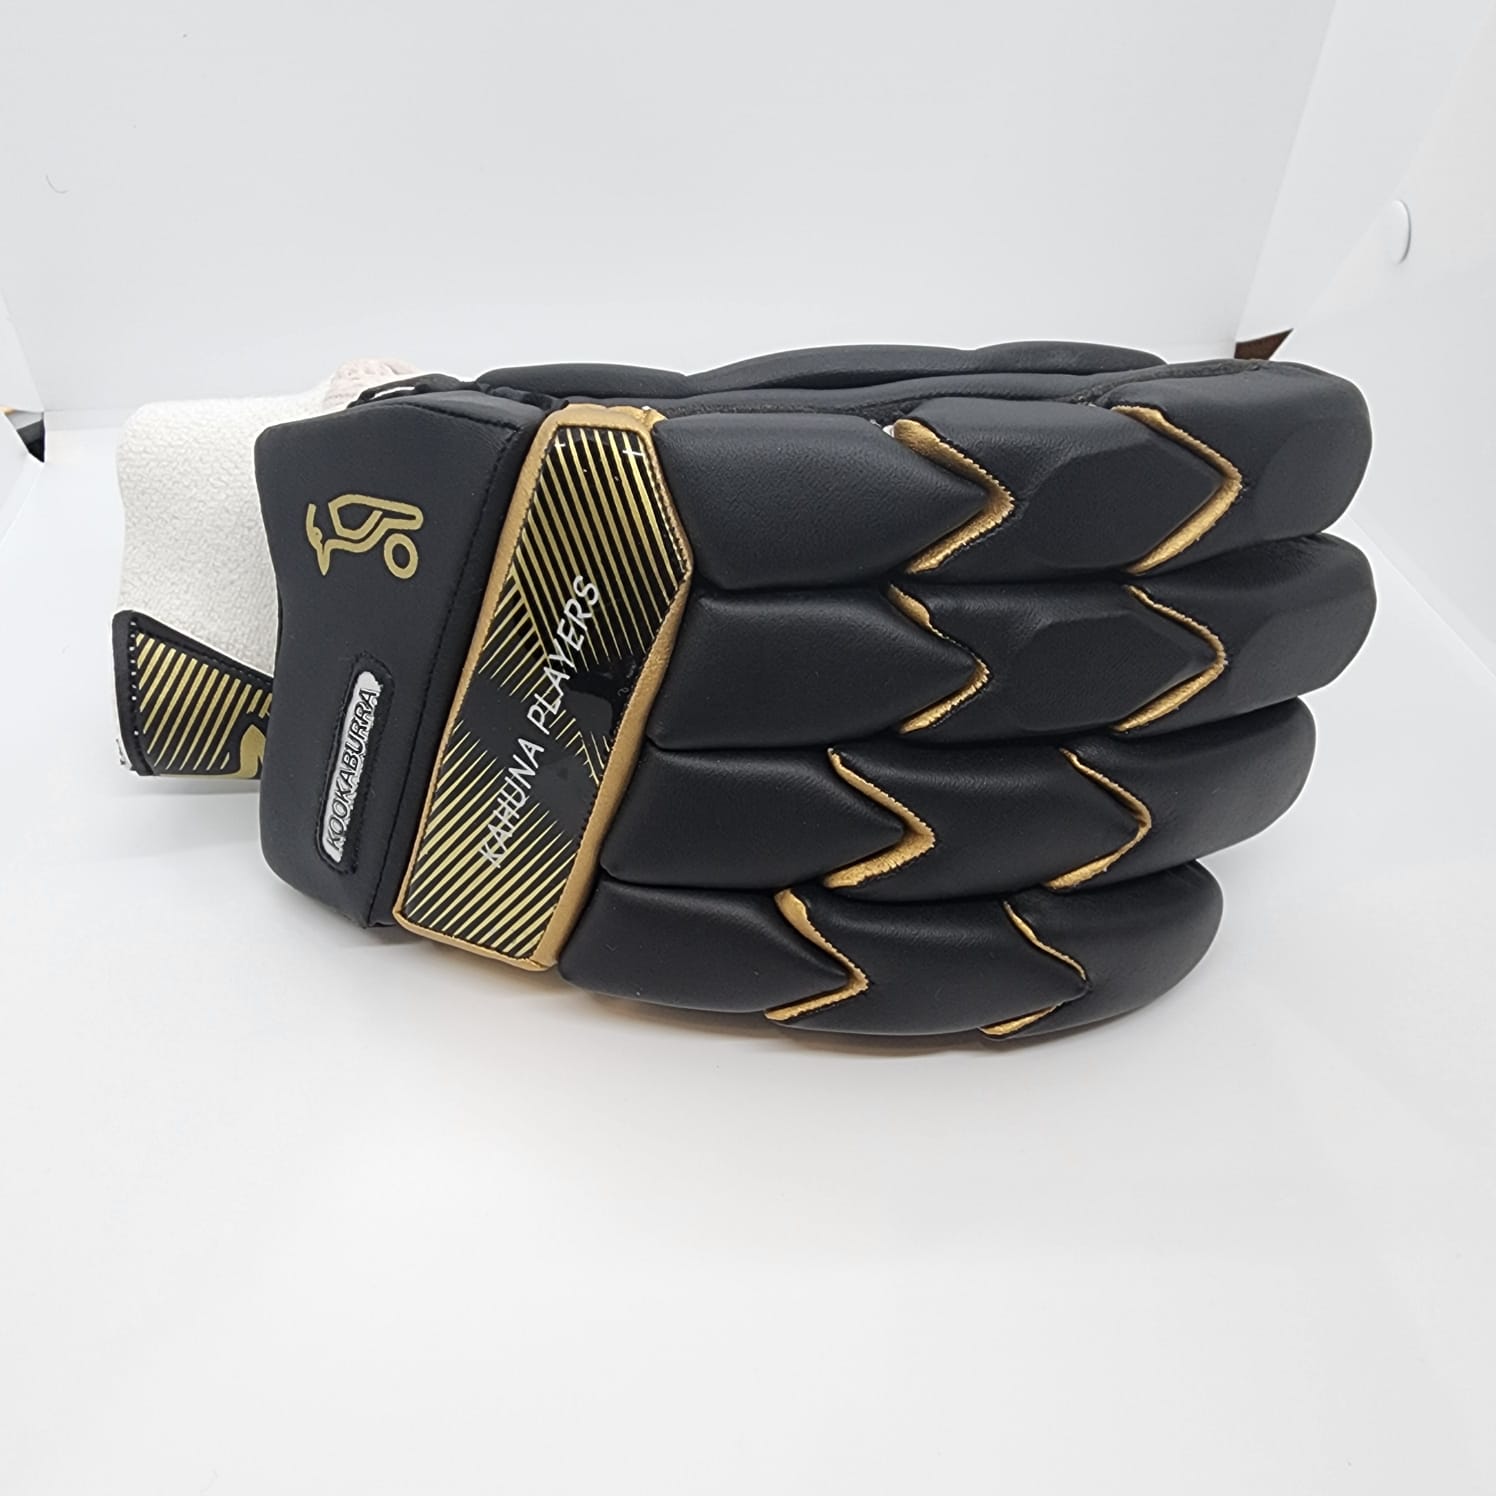 Kookaburra Kahuna Players Cricket Batting Gloves, Men Size Golden Black - For Right Hand Players